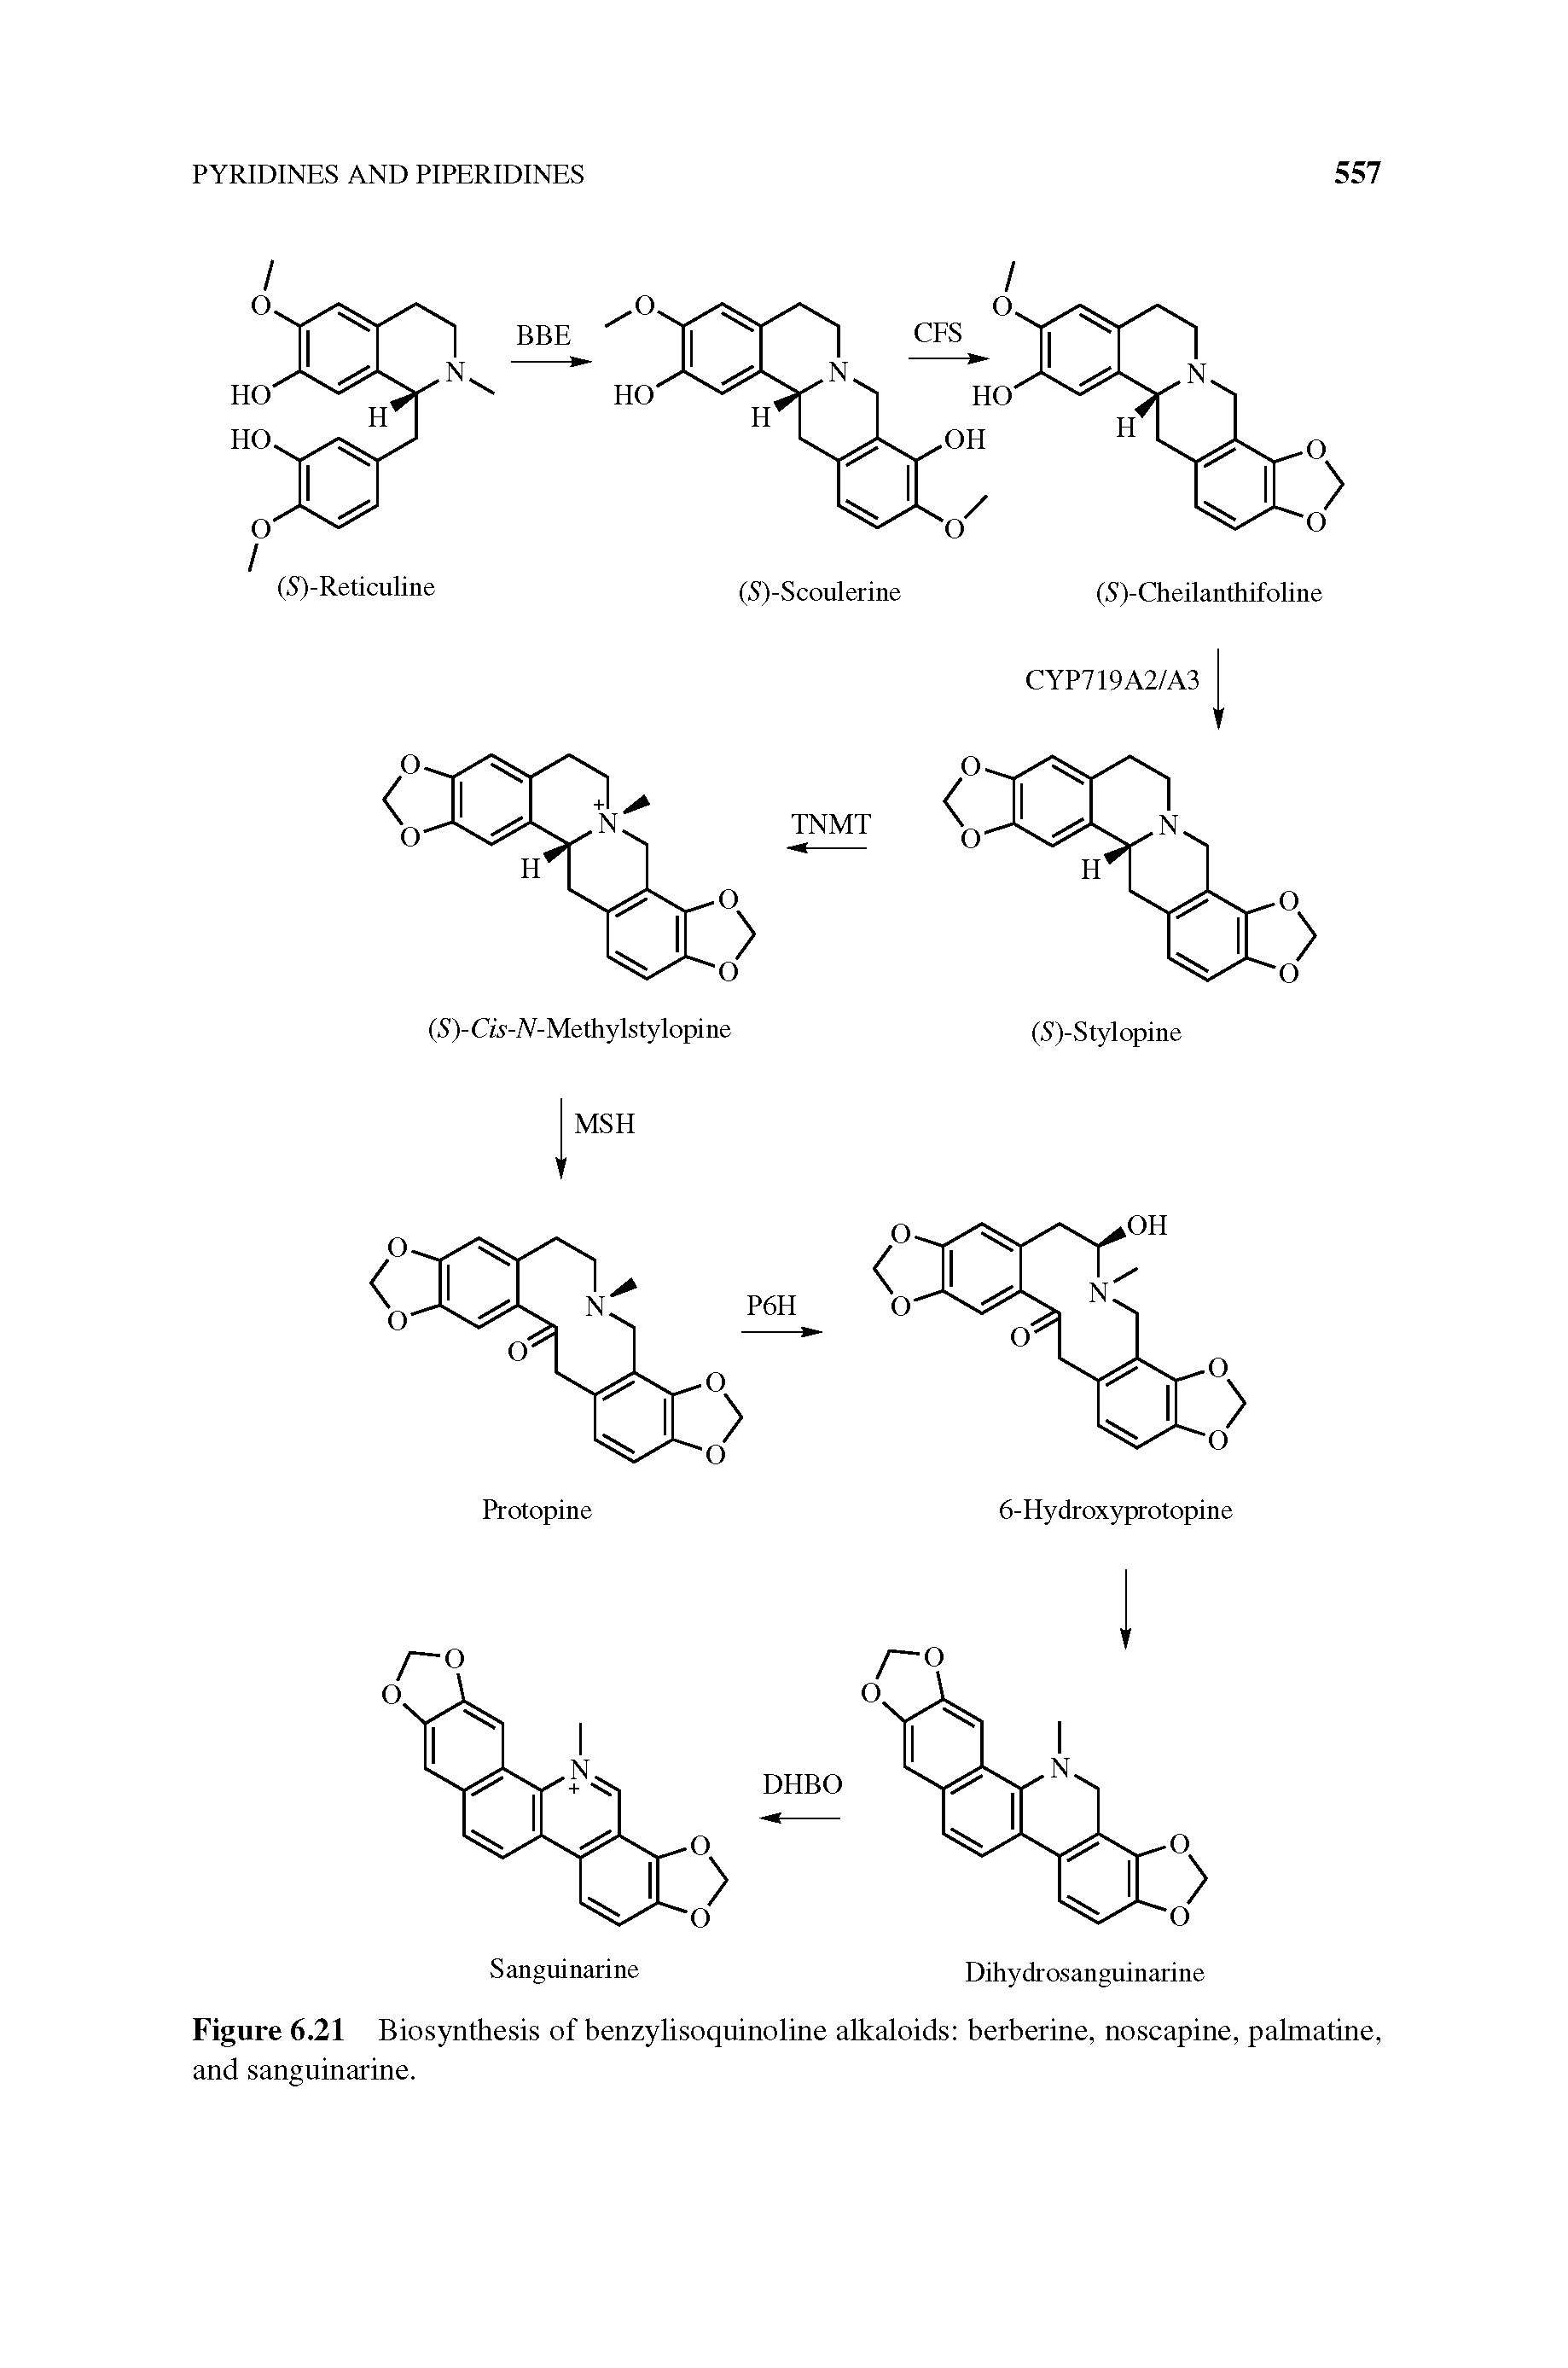 Figure 6.21 Biosynthesis of benzylisoquinoline alkaloids berberine, noscapine, pabnatine, and sanguinarine.